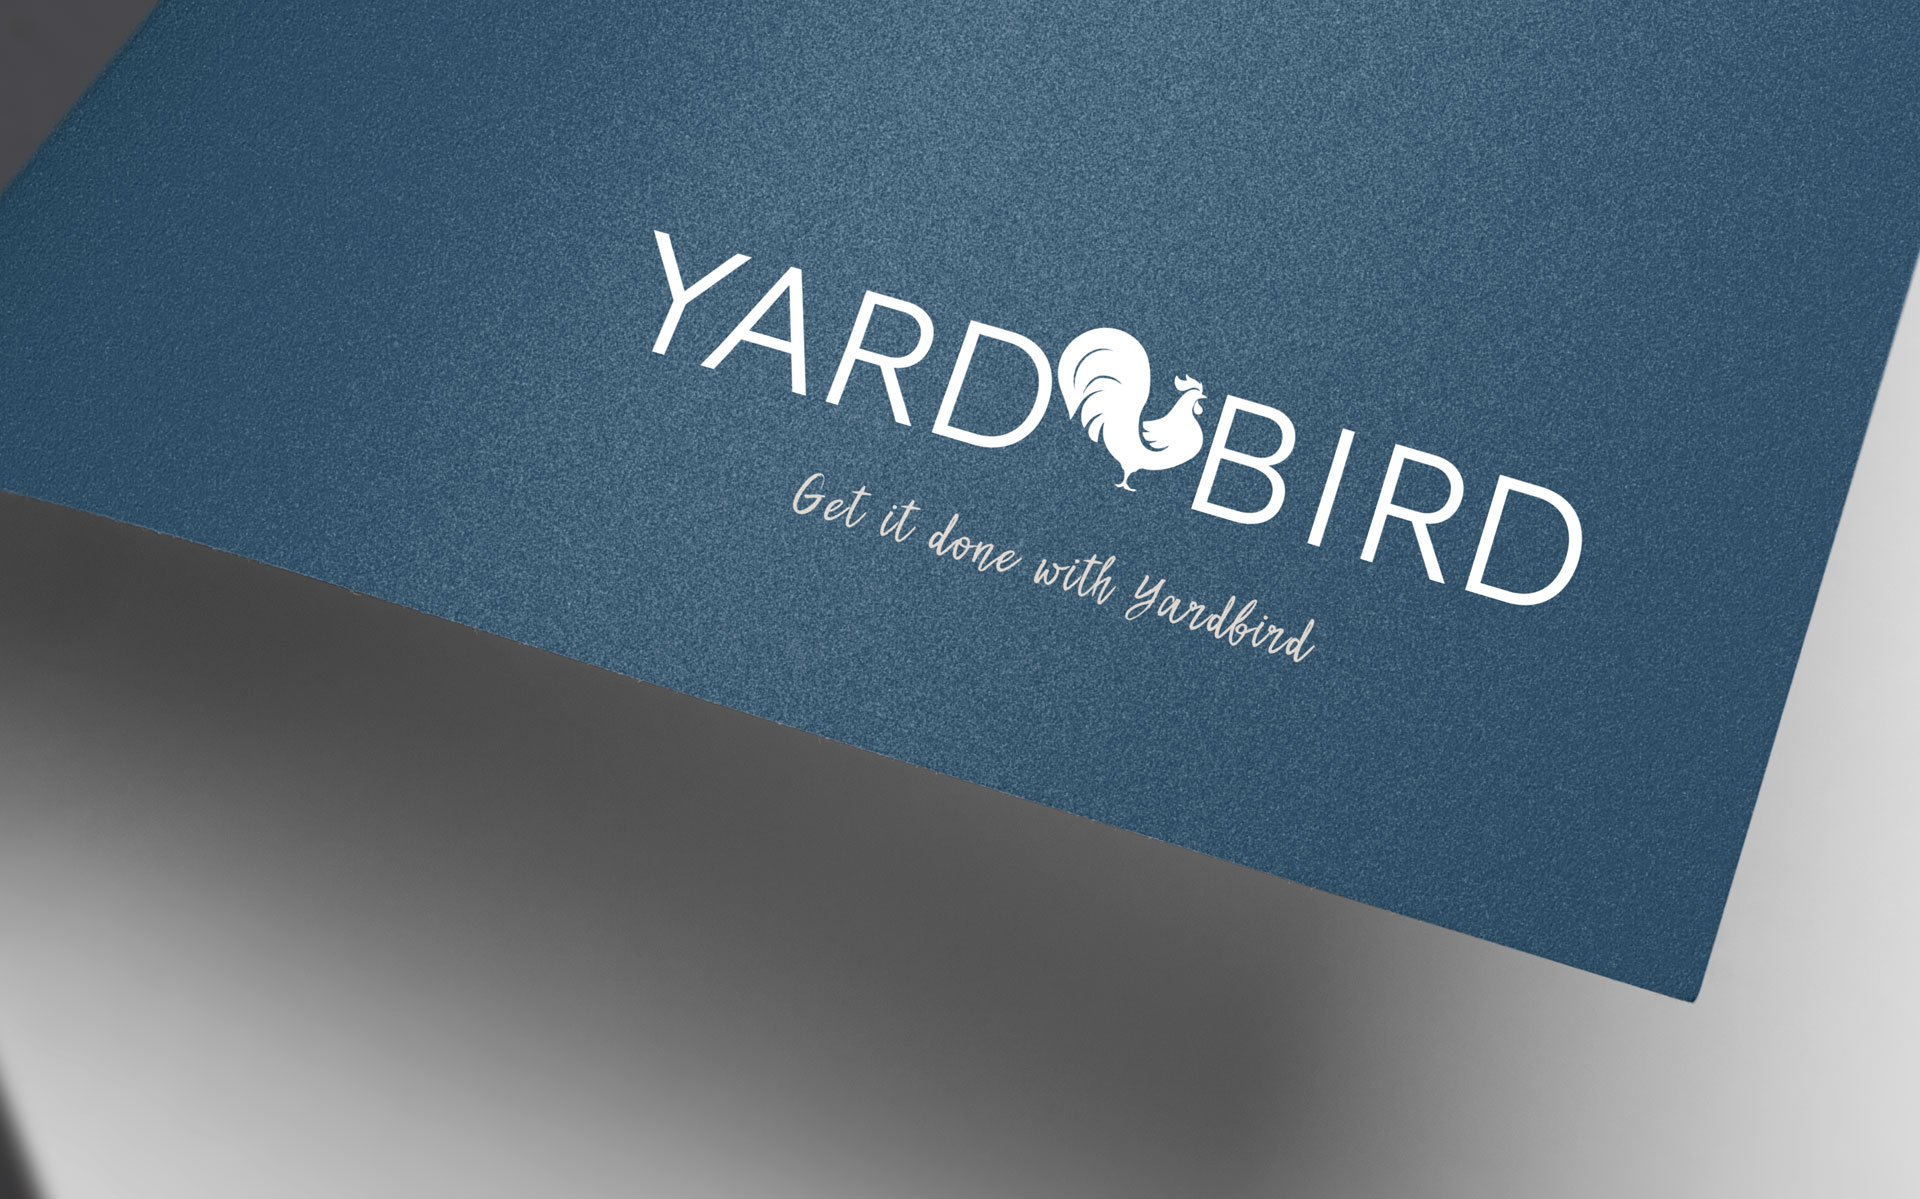 Yardbird branding designed by Amy at Yellow Sunday